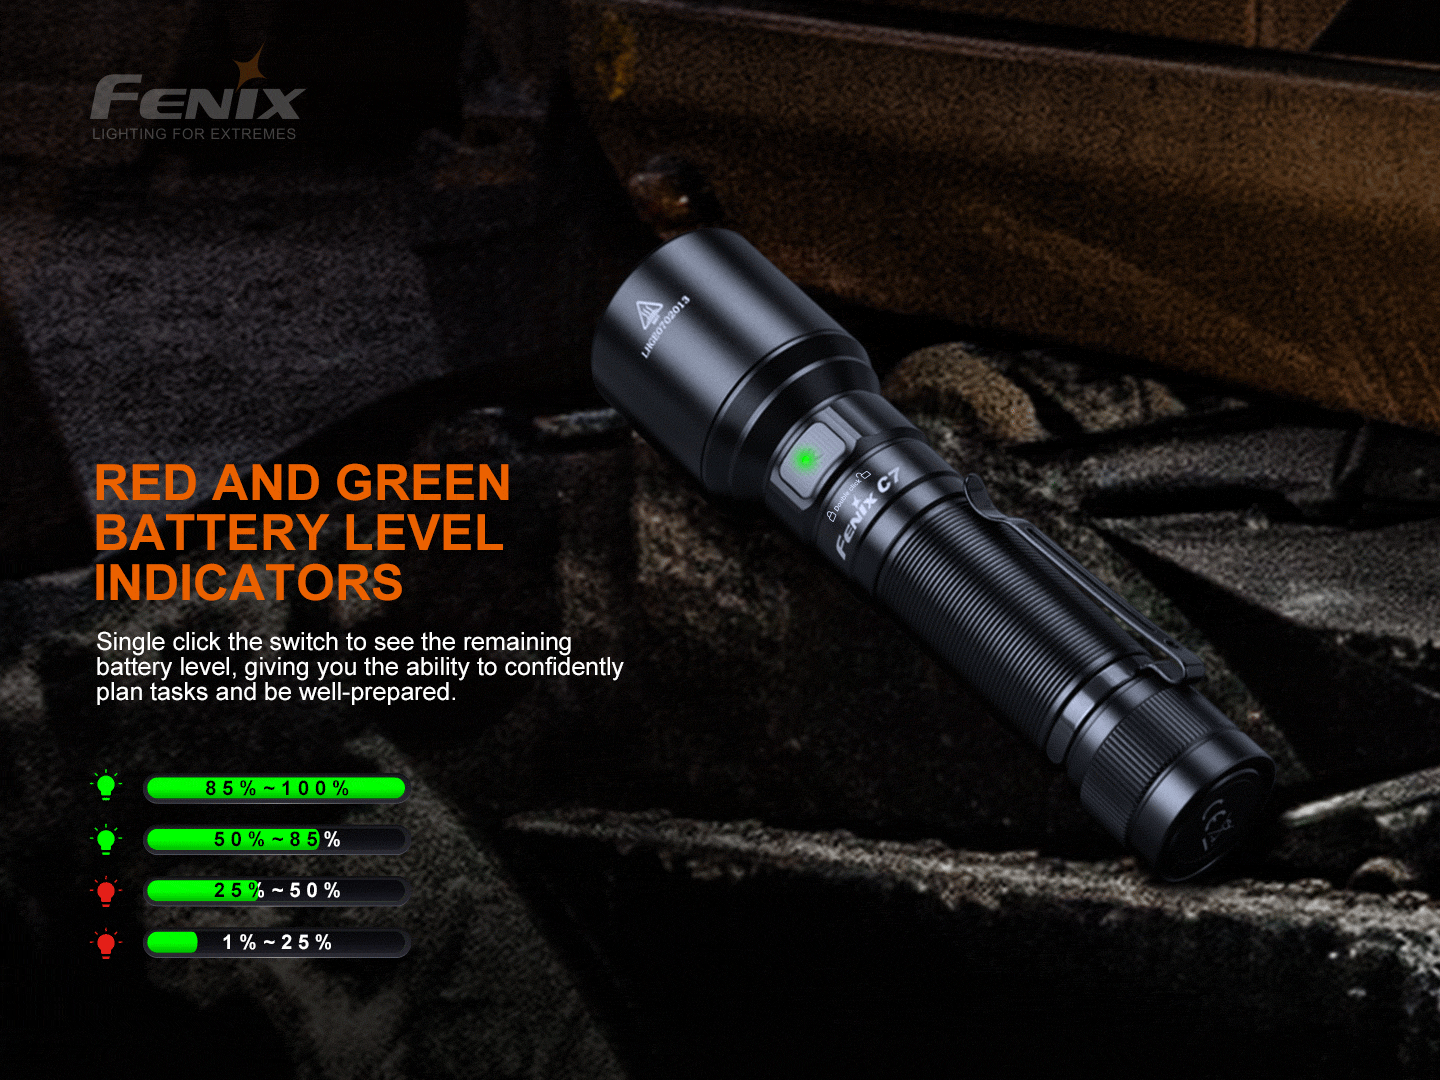 Fenix C7 High Performance Rechargeable Flashlight - 3000 Lumens